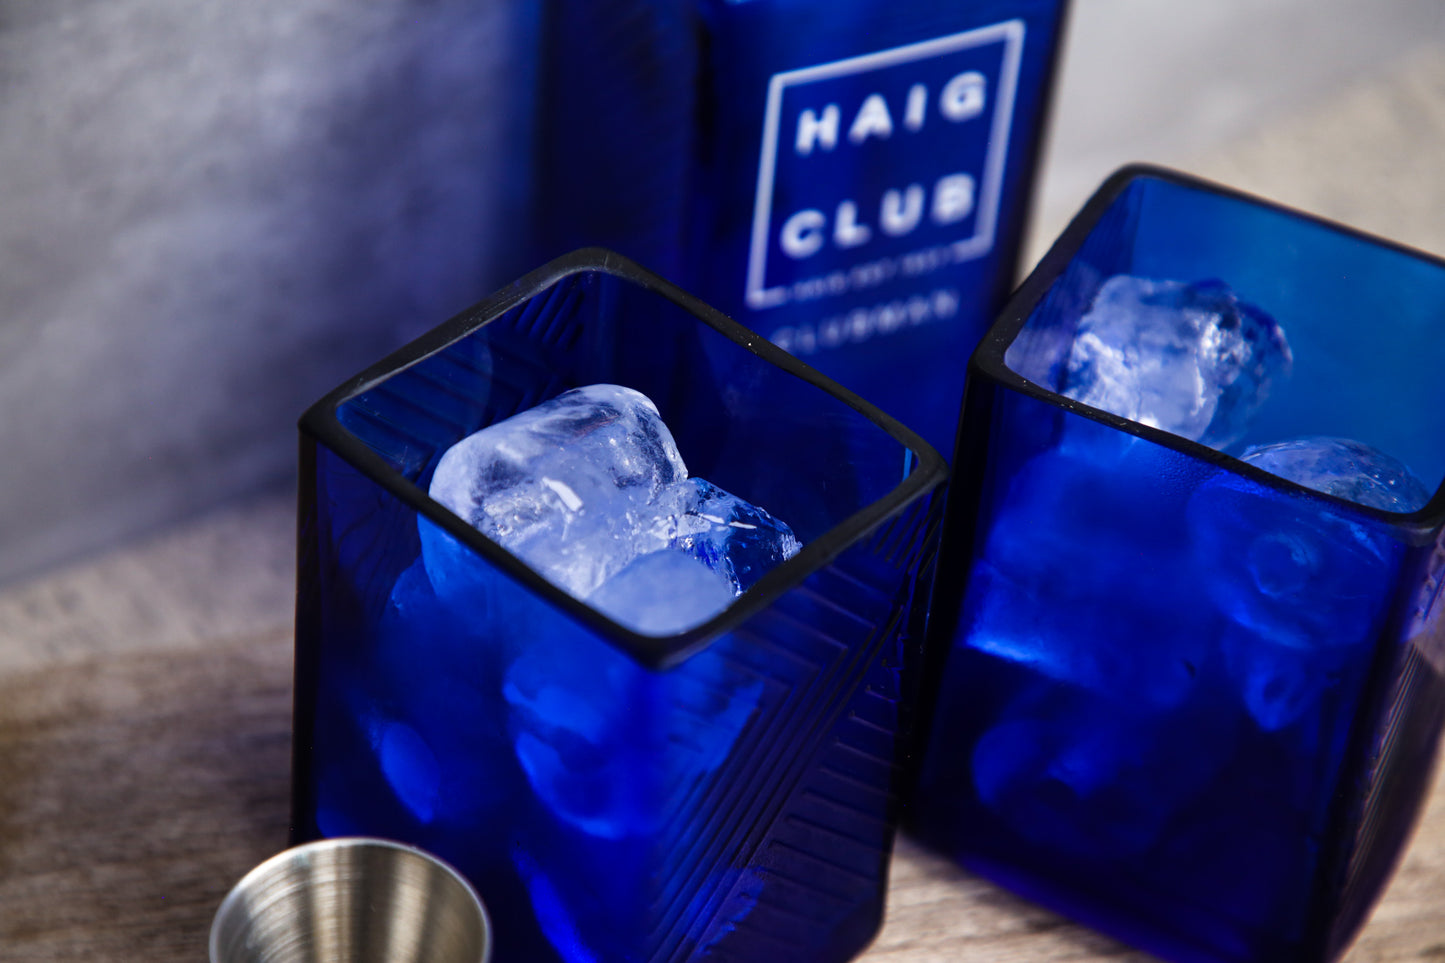 Haig Club Whisky Glass